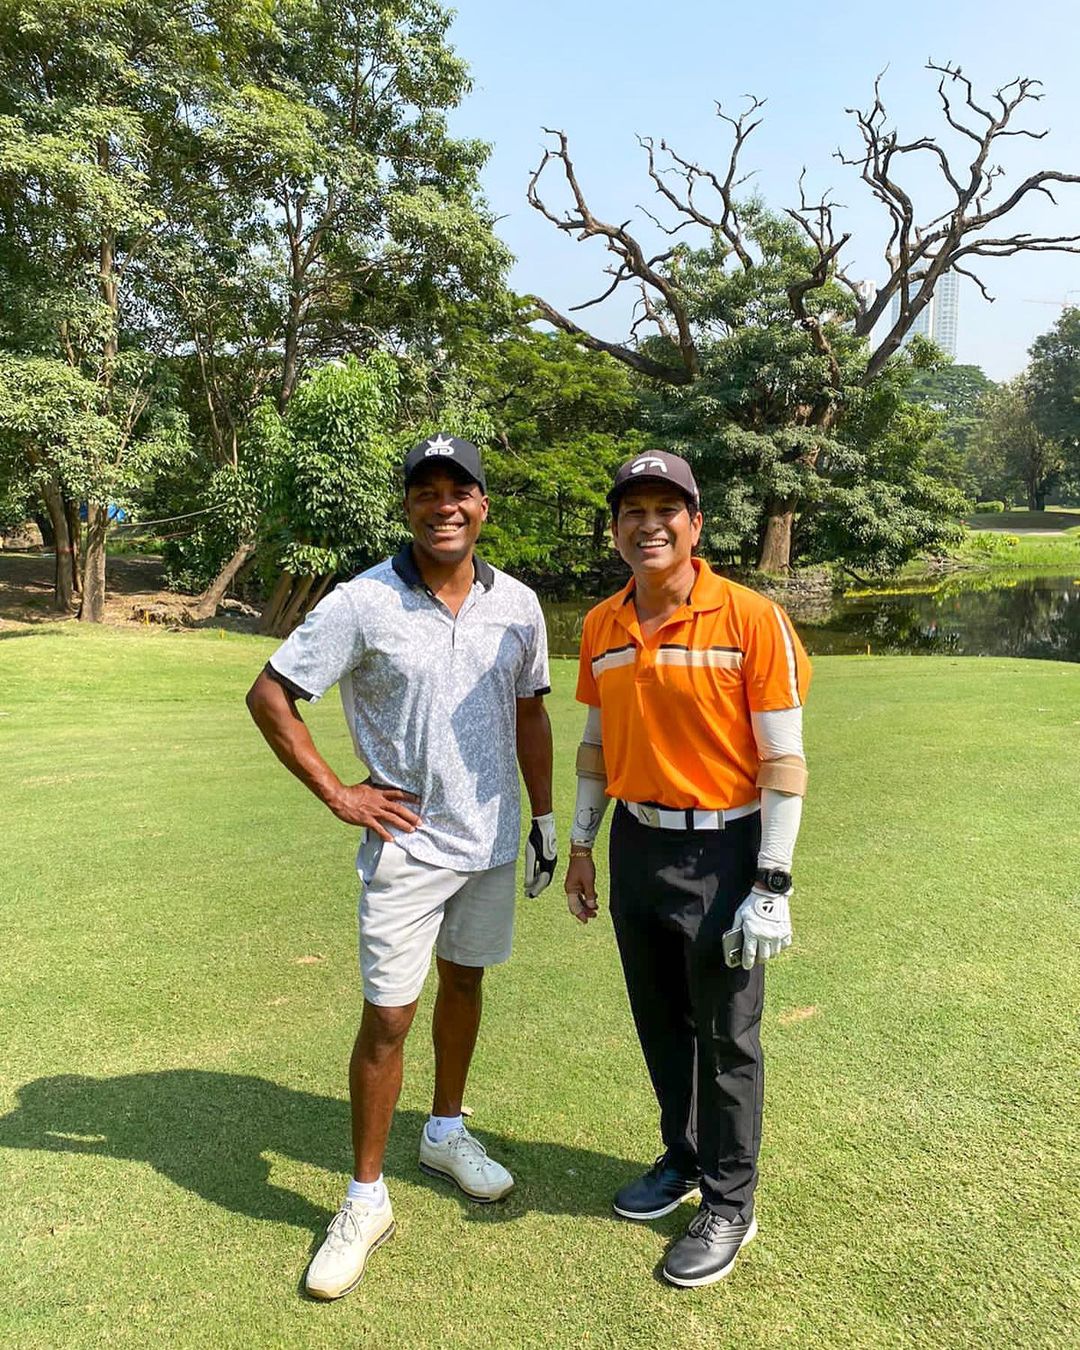 Lara and Tendulkar on the golf course | Sachin Tendulkar Instagram